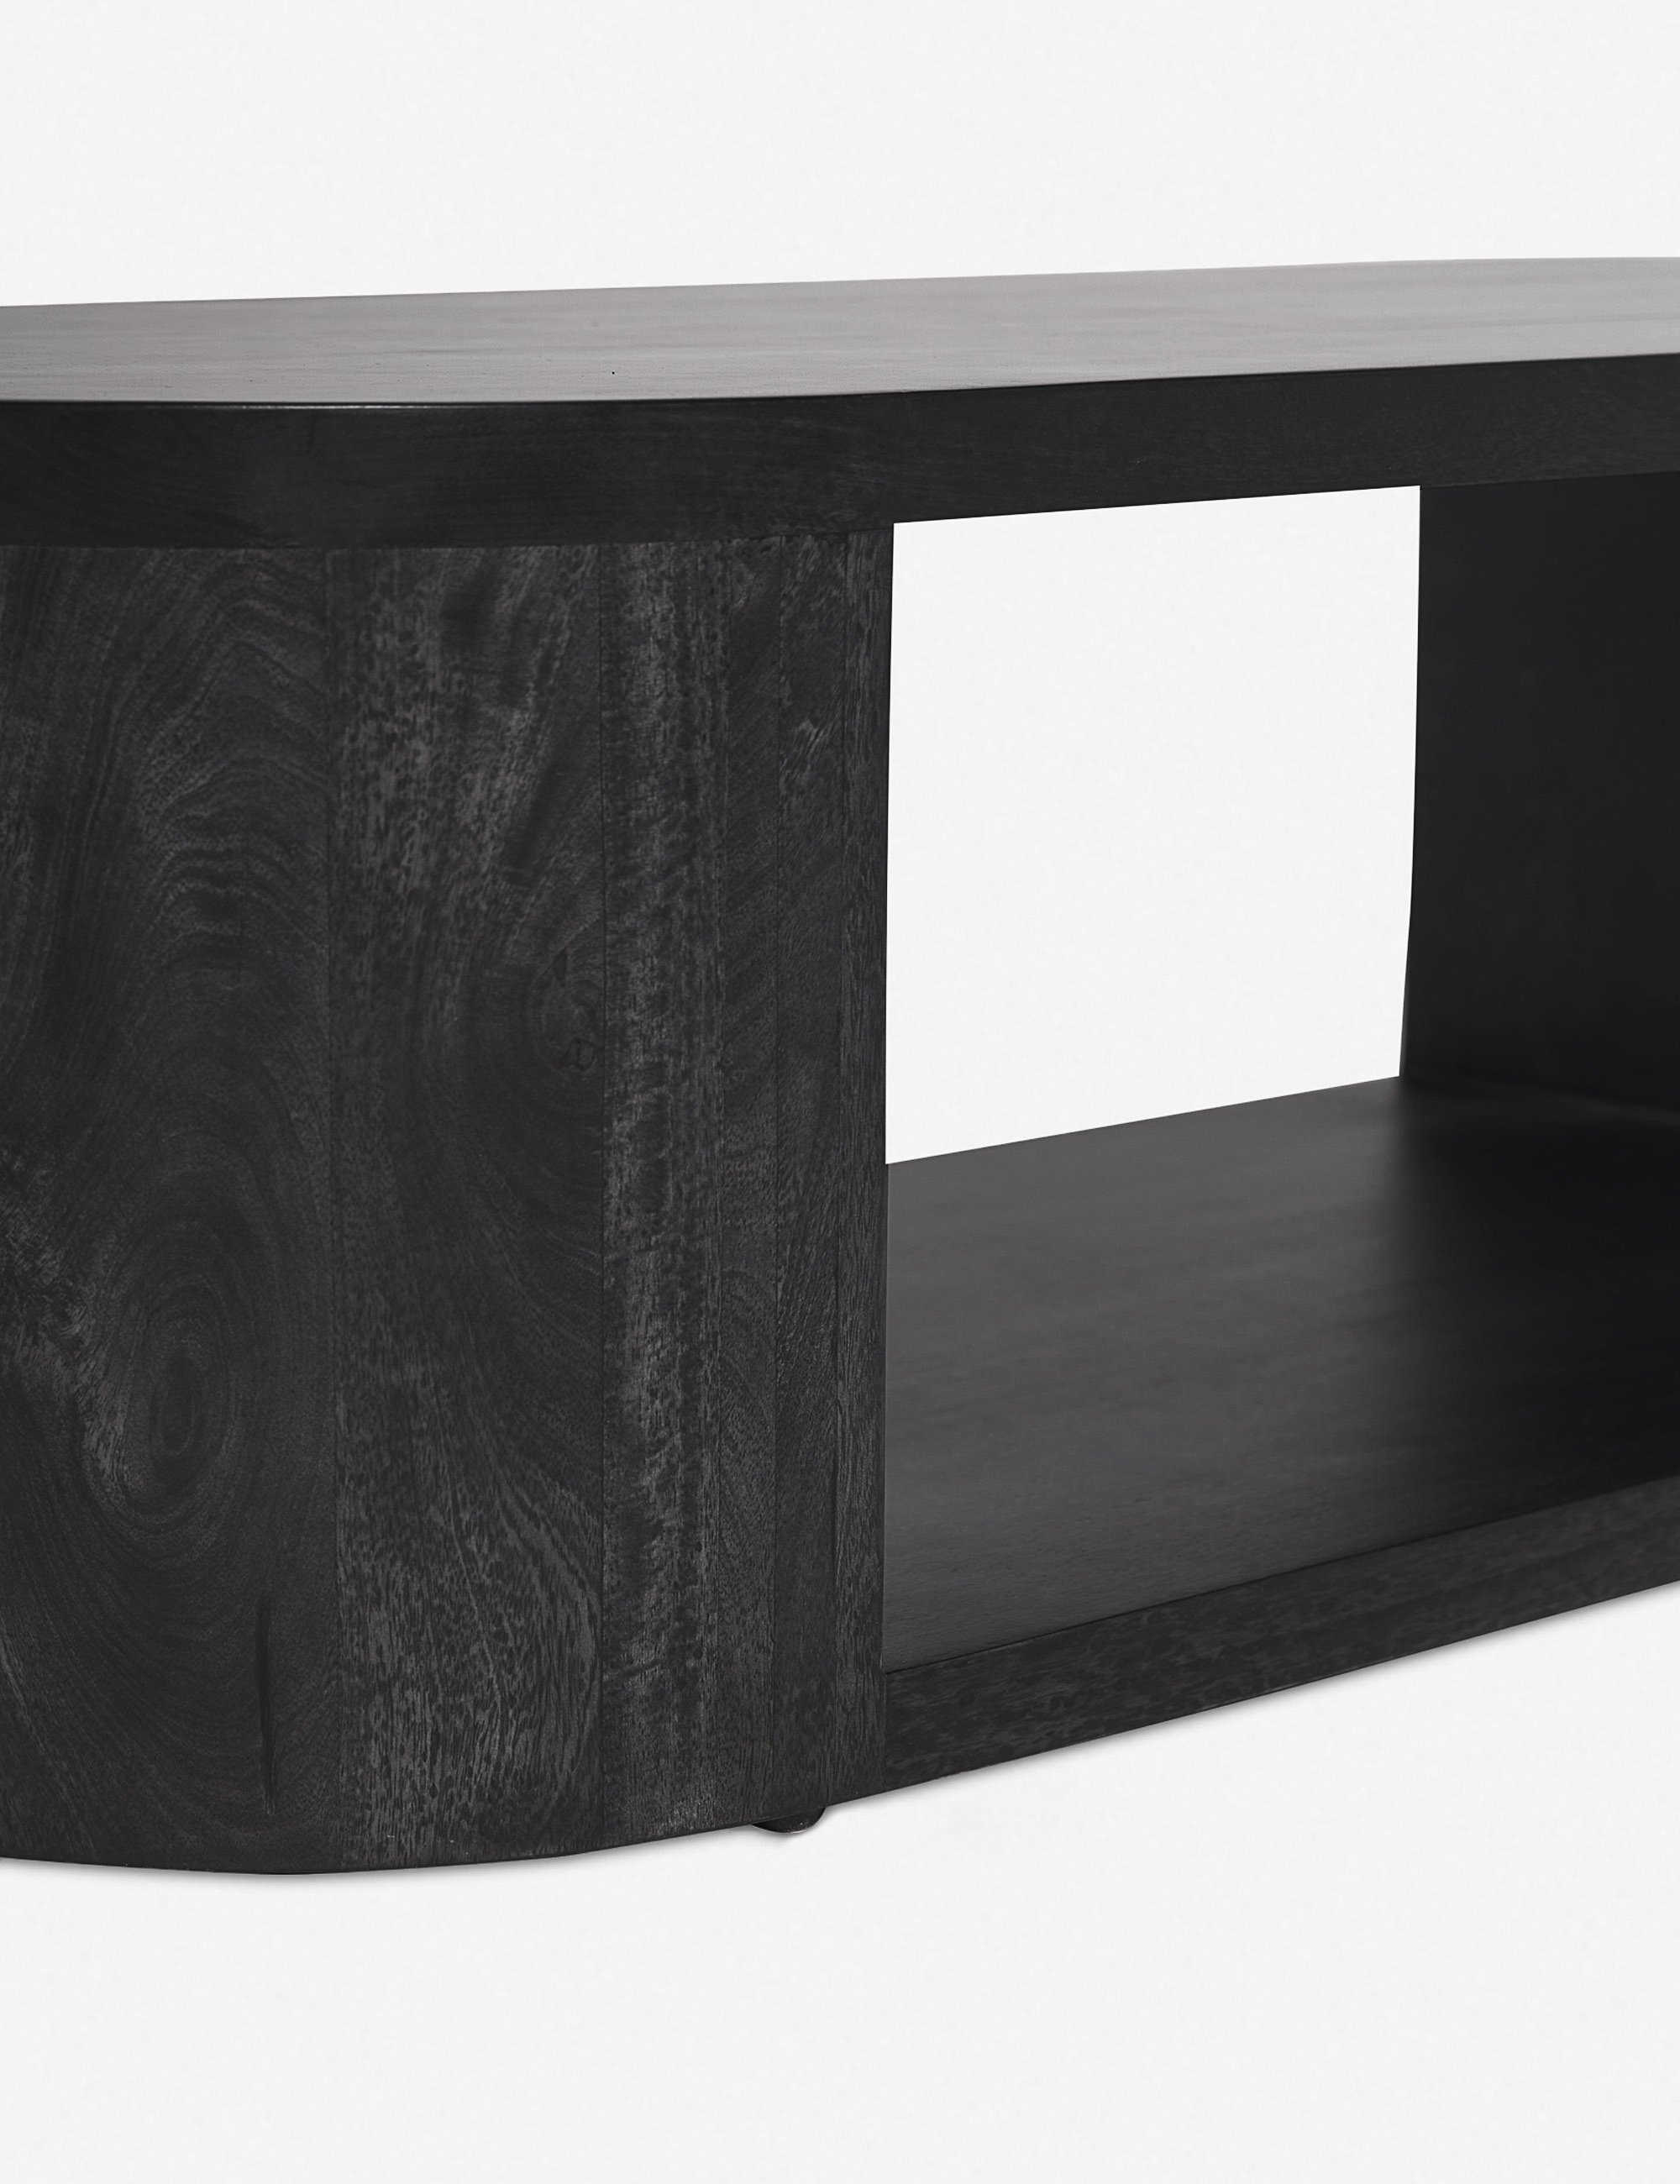 Luna Oval Coffee Table, Black - Image 6